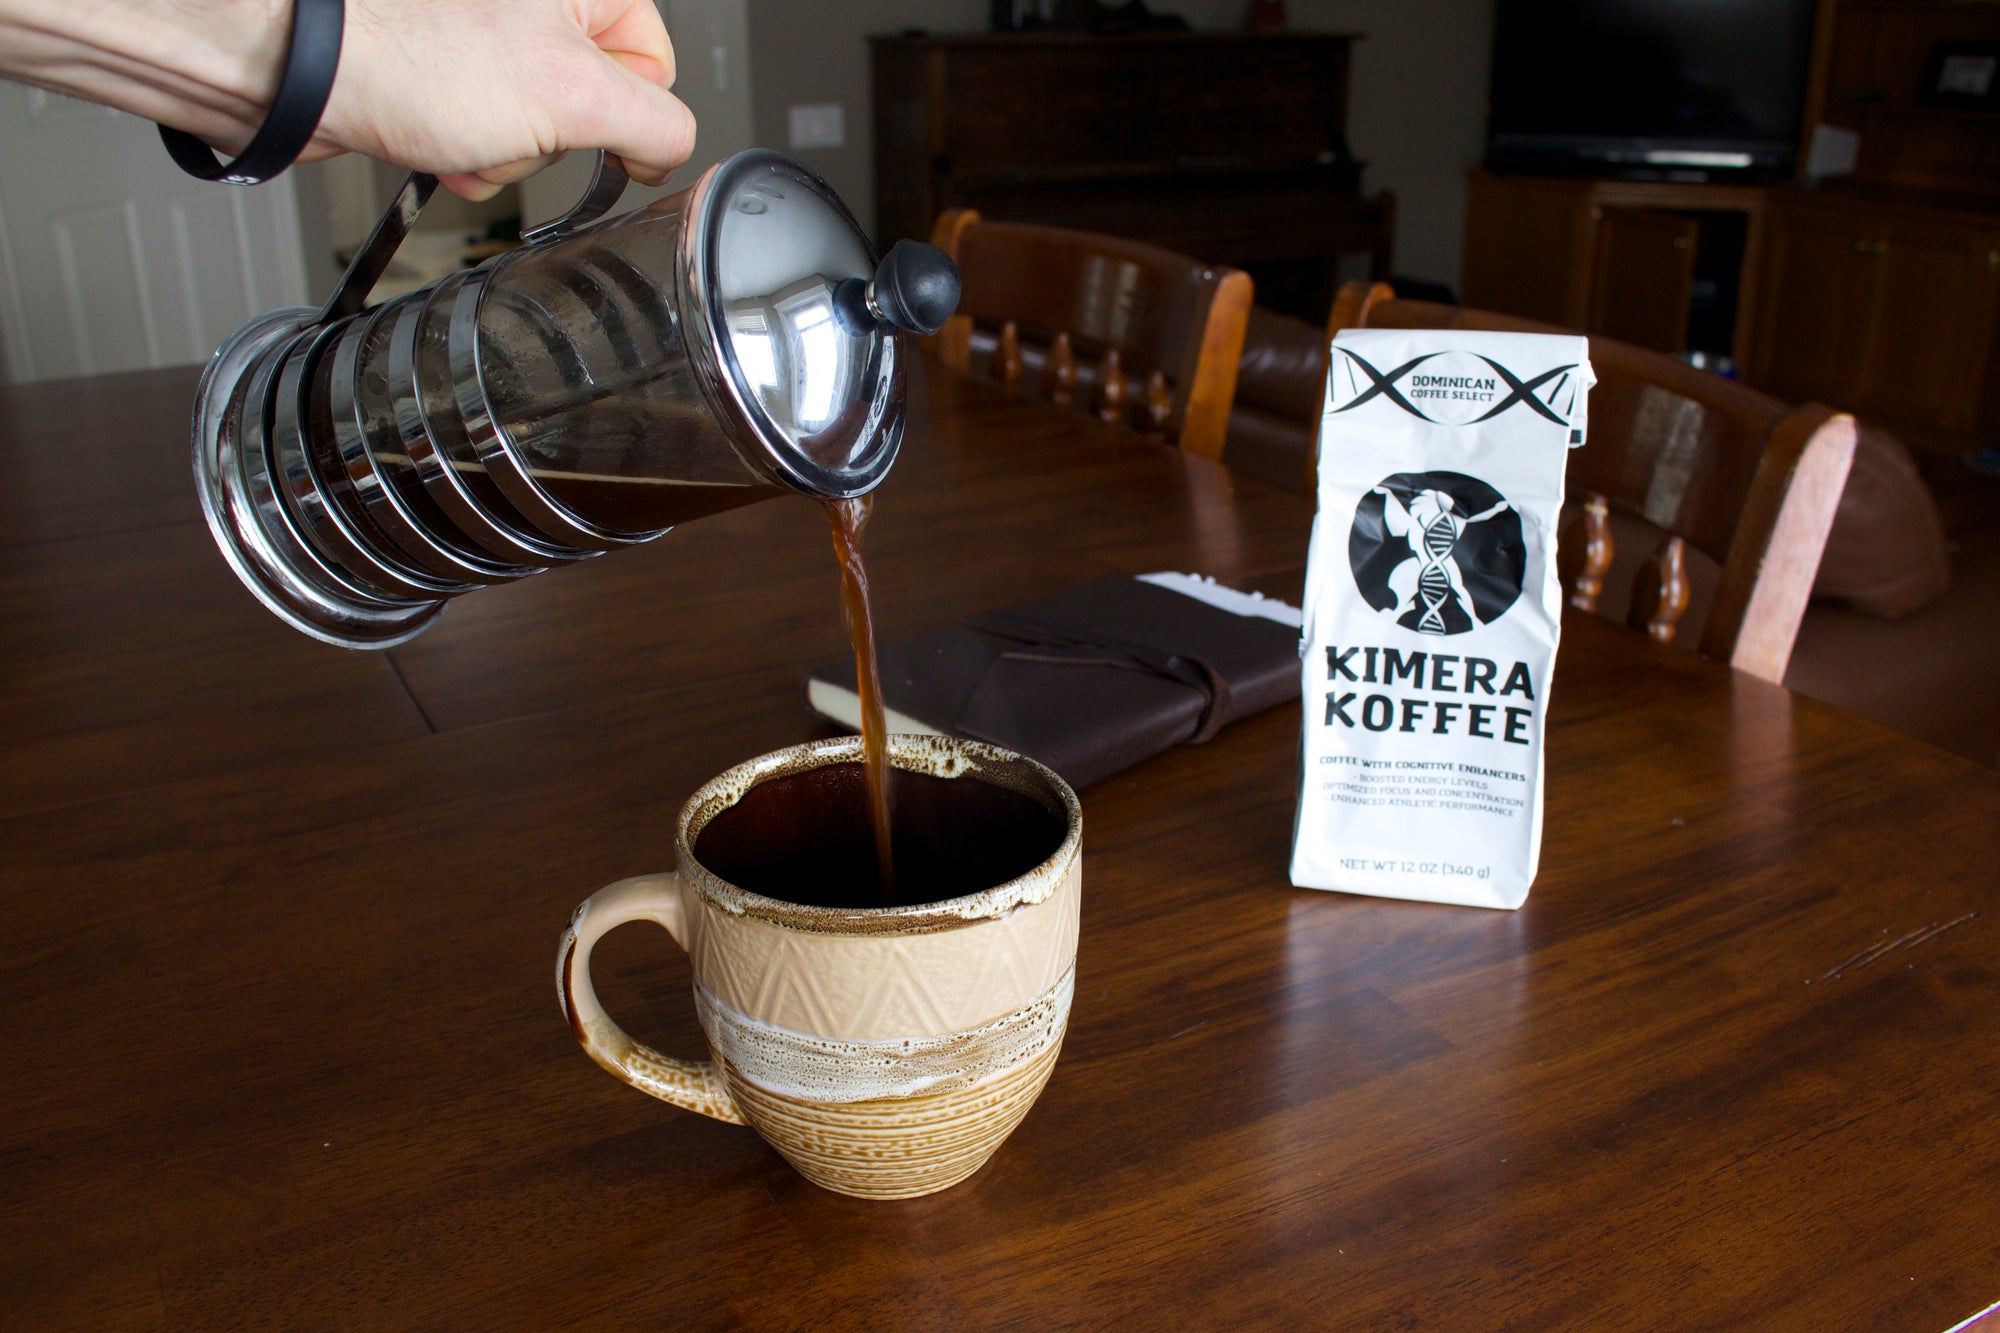 One Cut Reviews: Kimera Koffee